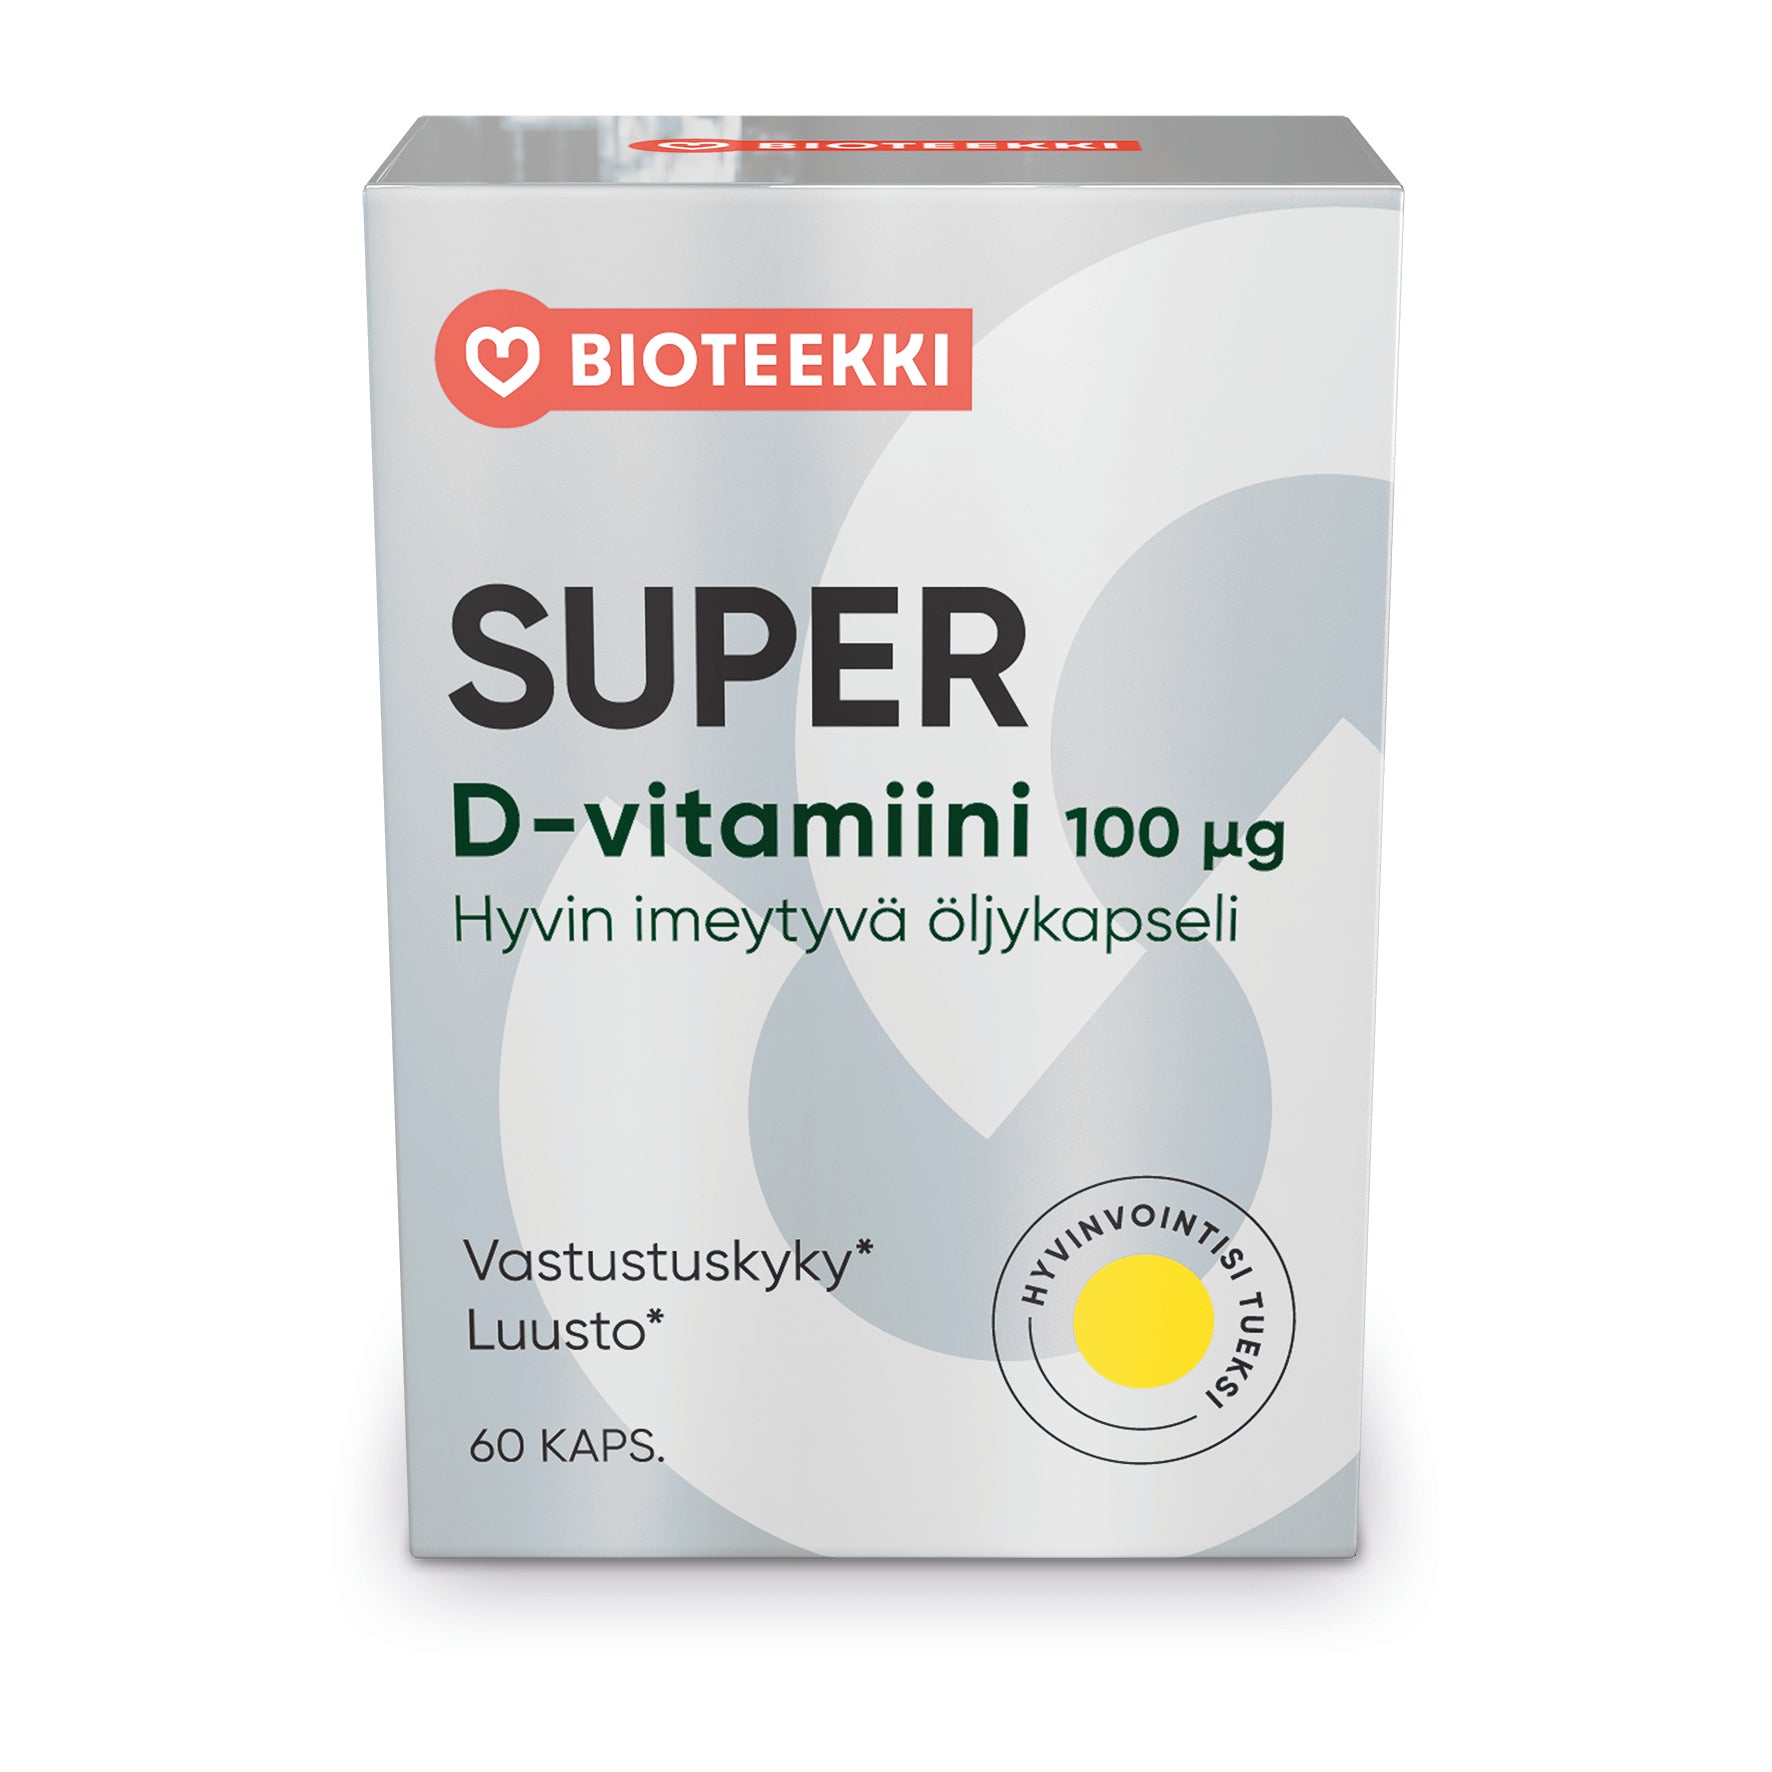 Bioteekin Super D-vitamiini 100 µg 60 kaps.